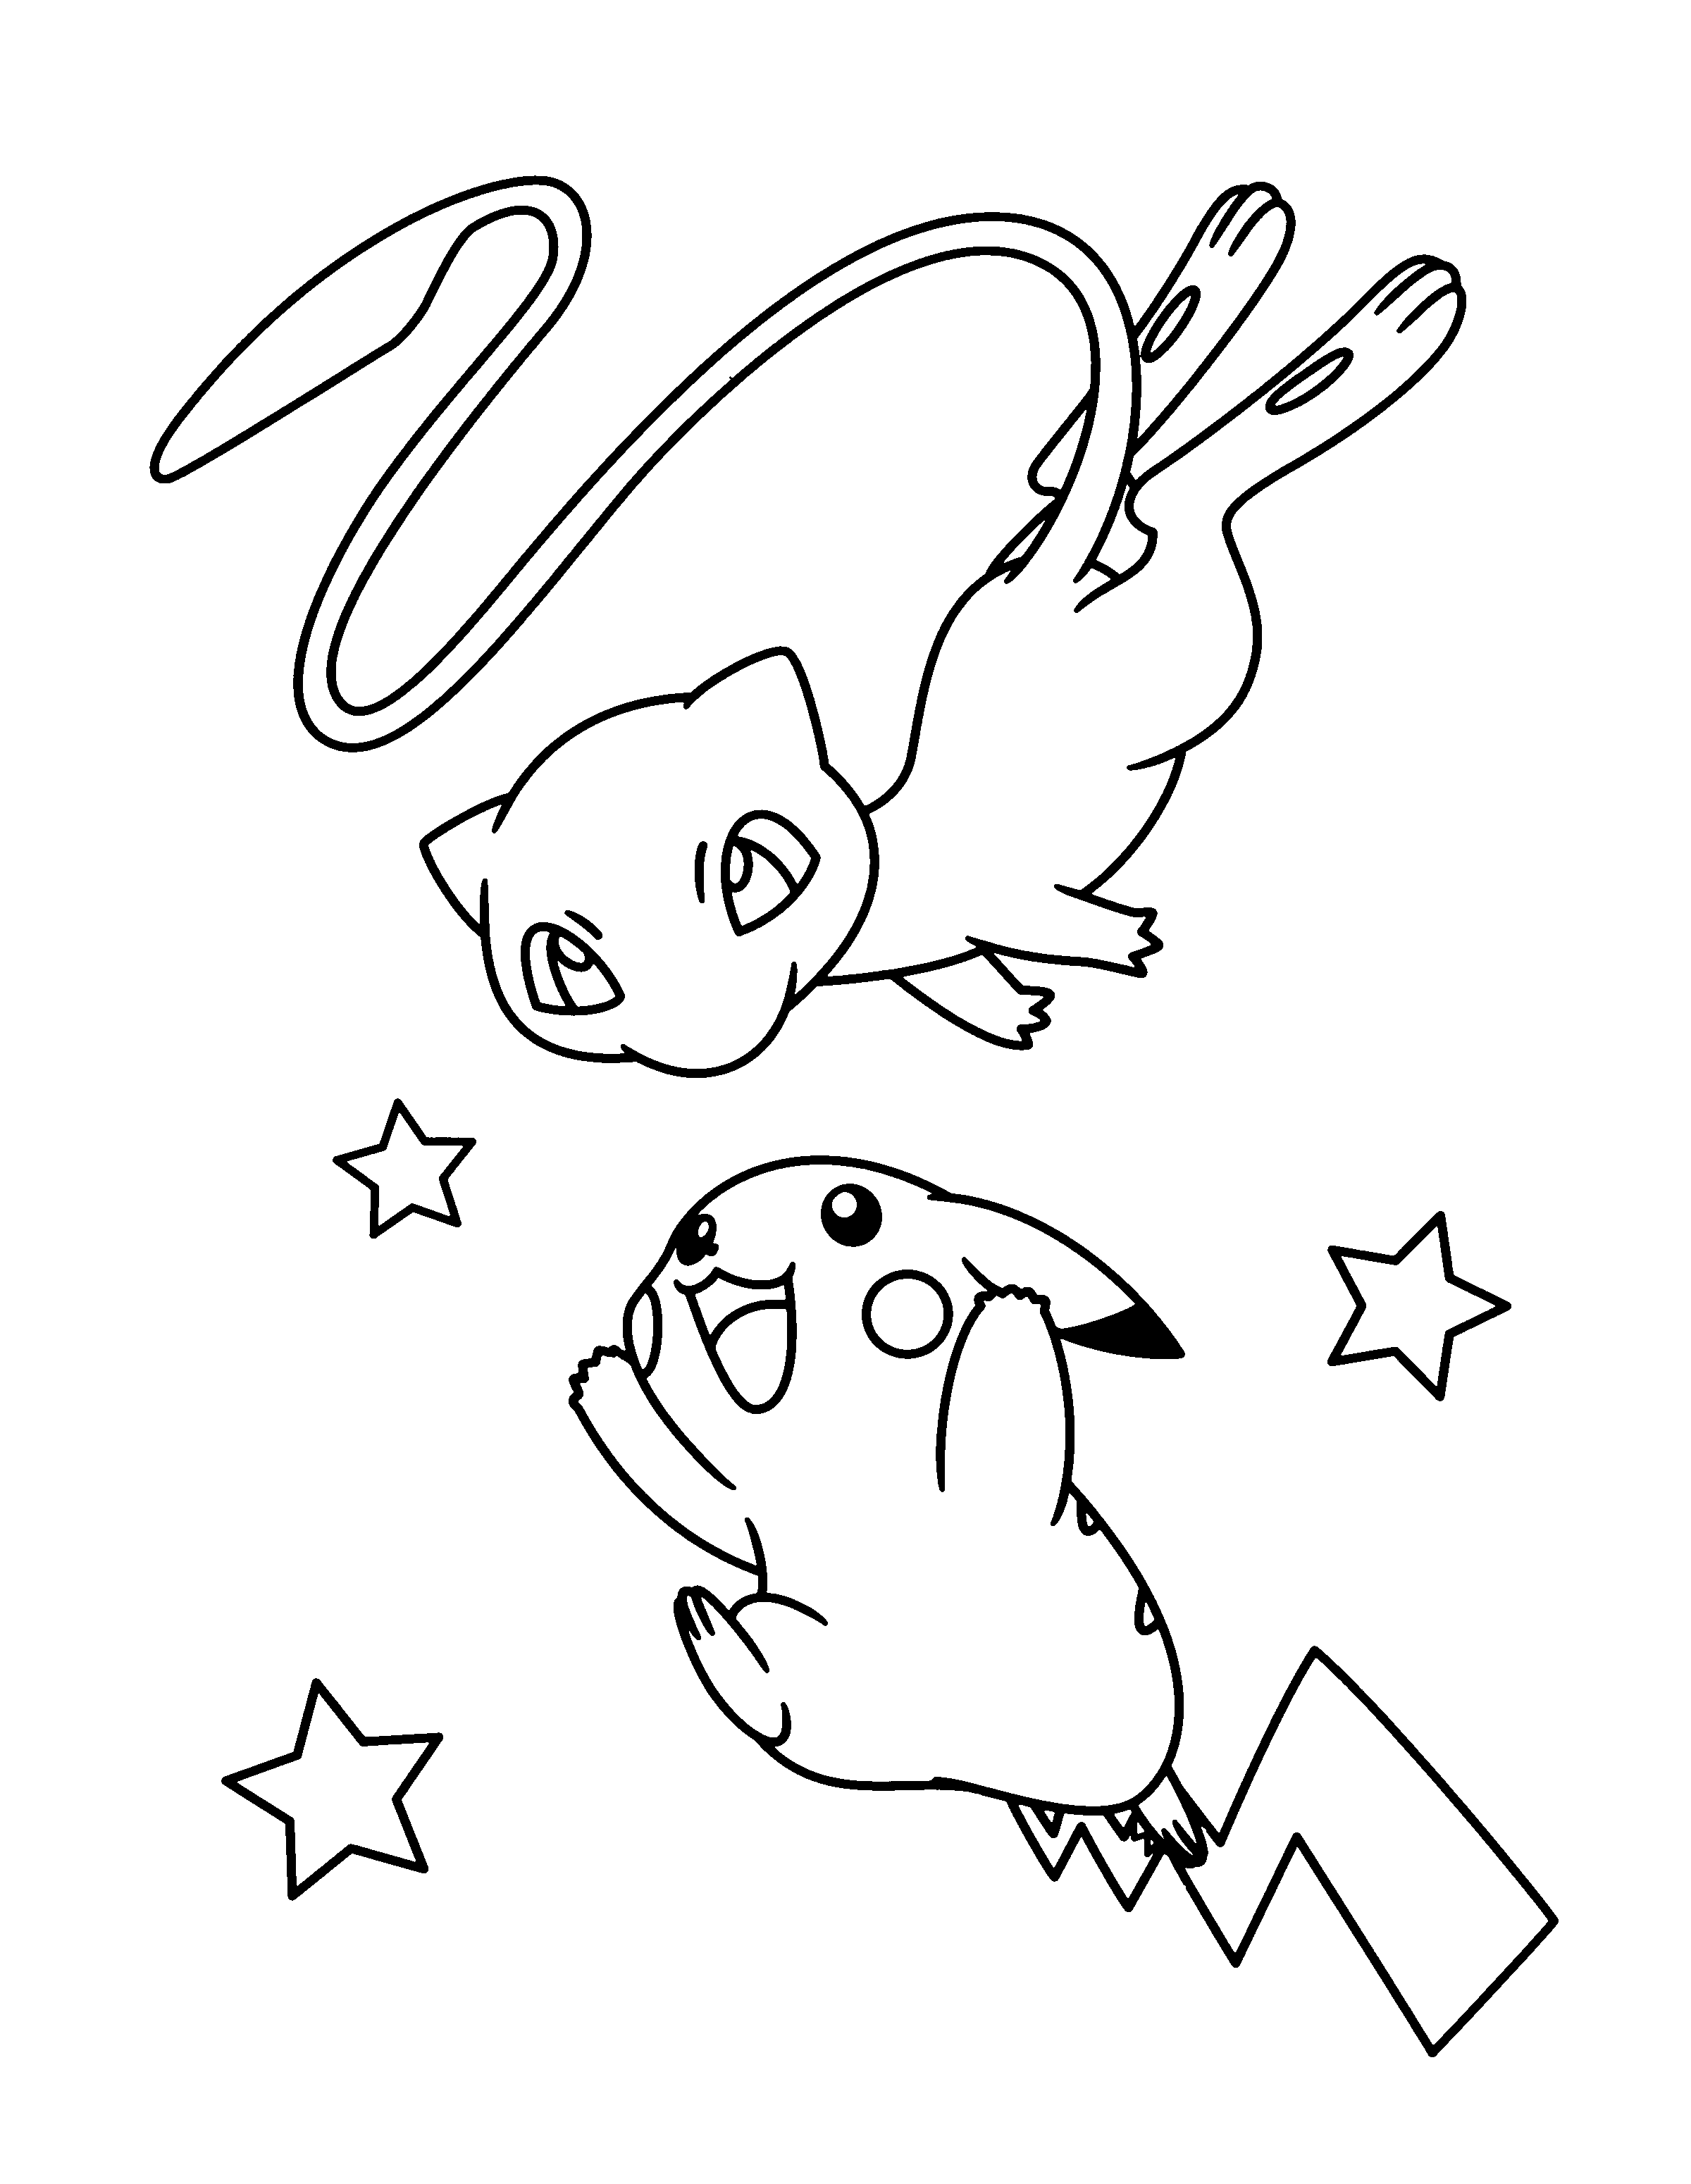 Coloriage pikachu gratuit - dessin a imprimer #278